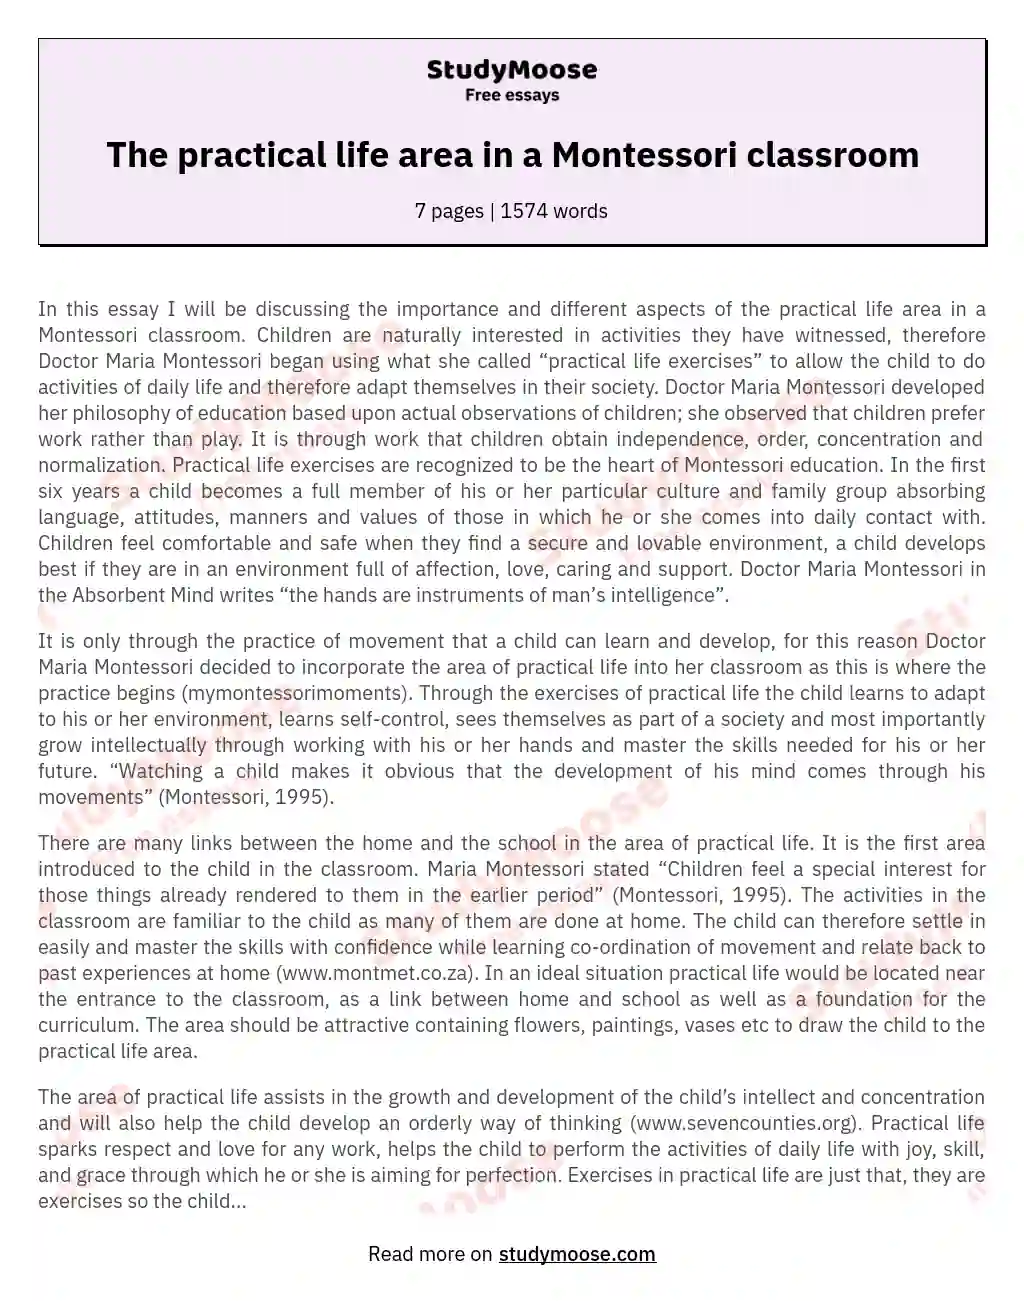 The practical life area in a Montessori classroom essay